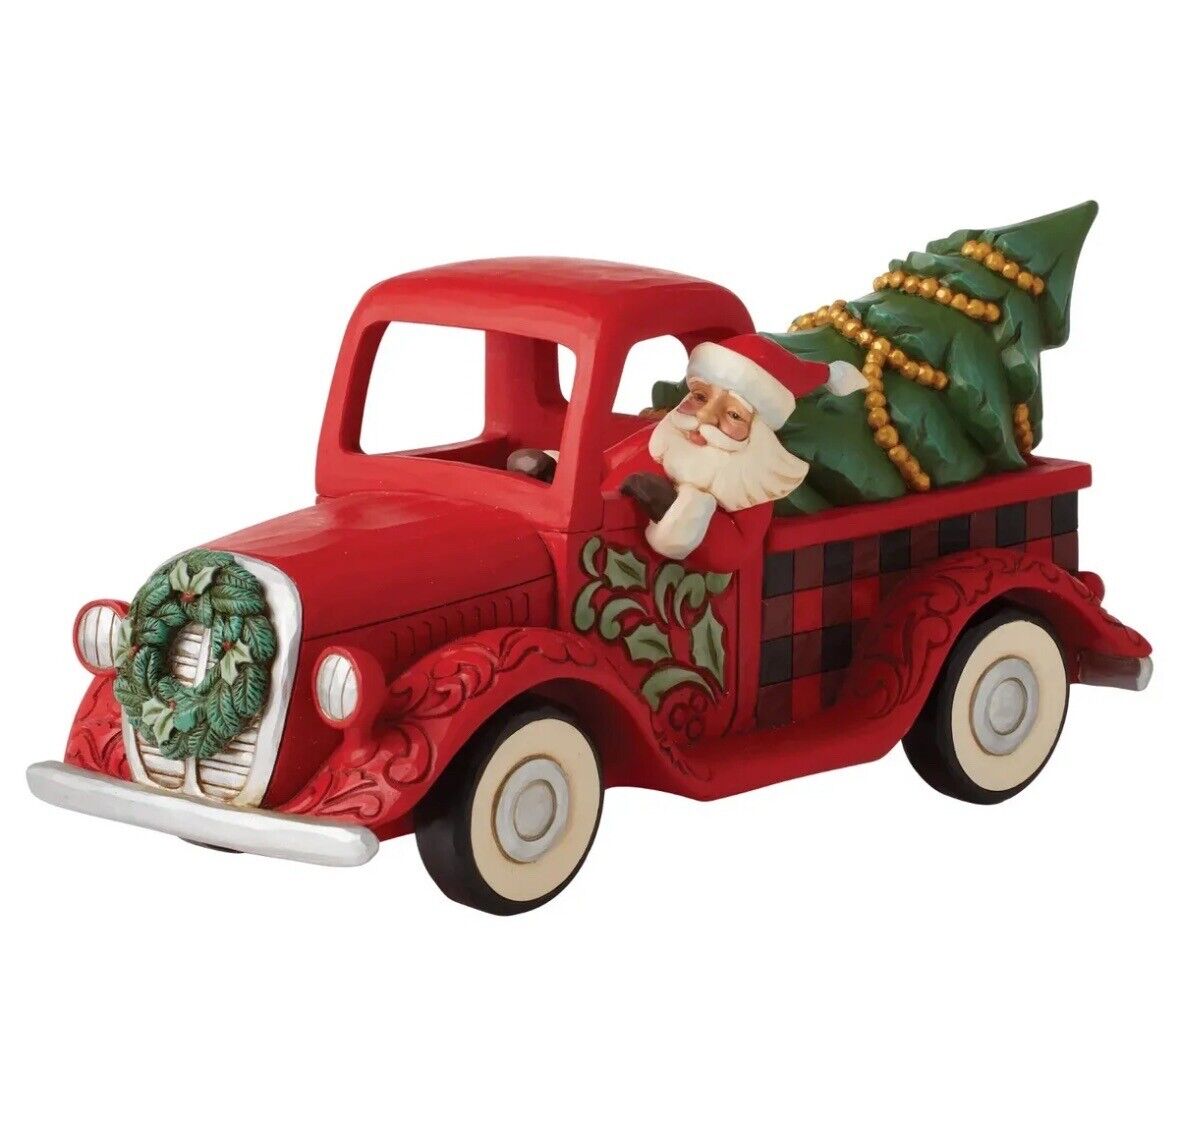 Jim Shore Highland Glen Christmas Santa Plaid Red Truck Figurine 6012862